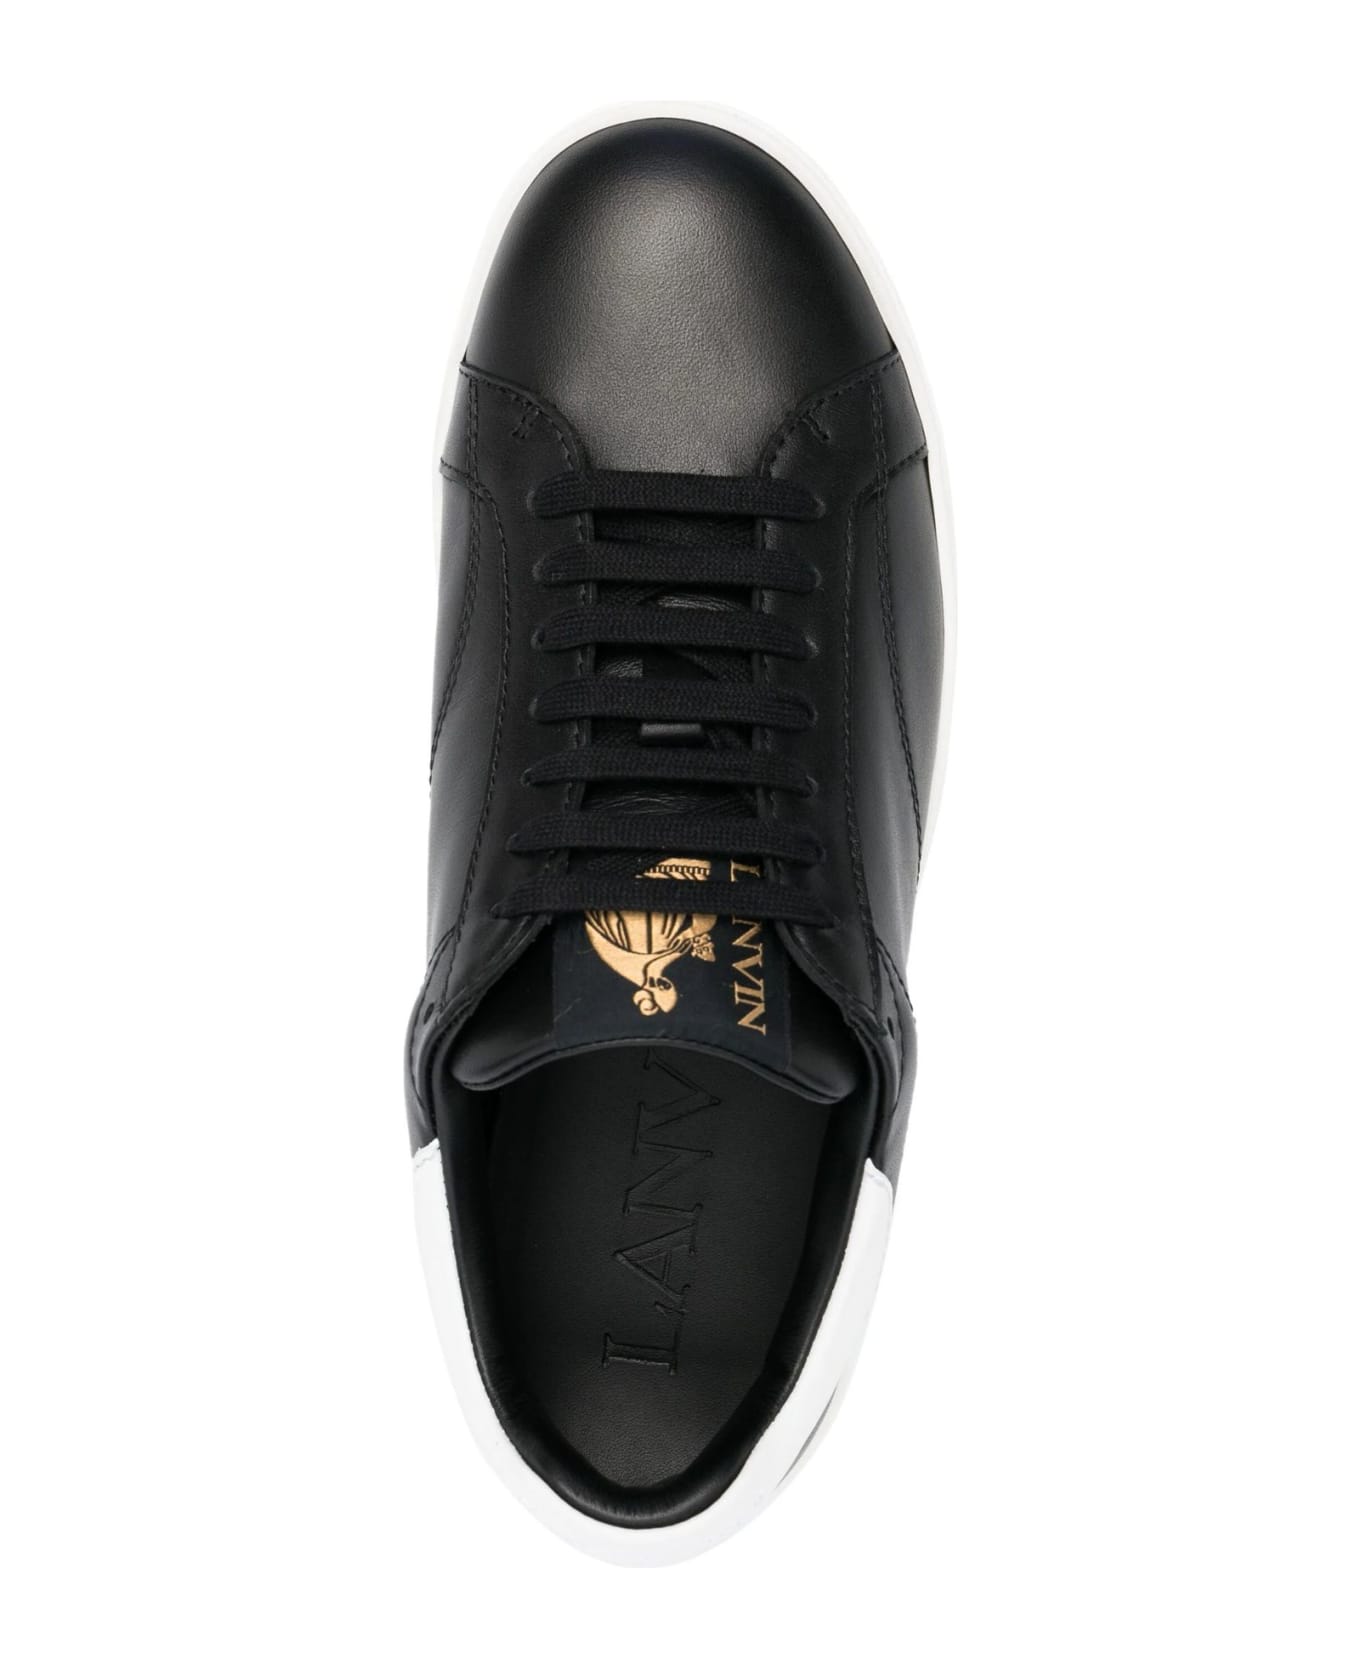 Lanvin Sneakers Black - Black スニーカー